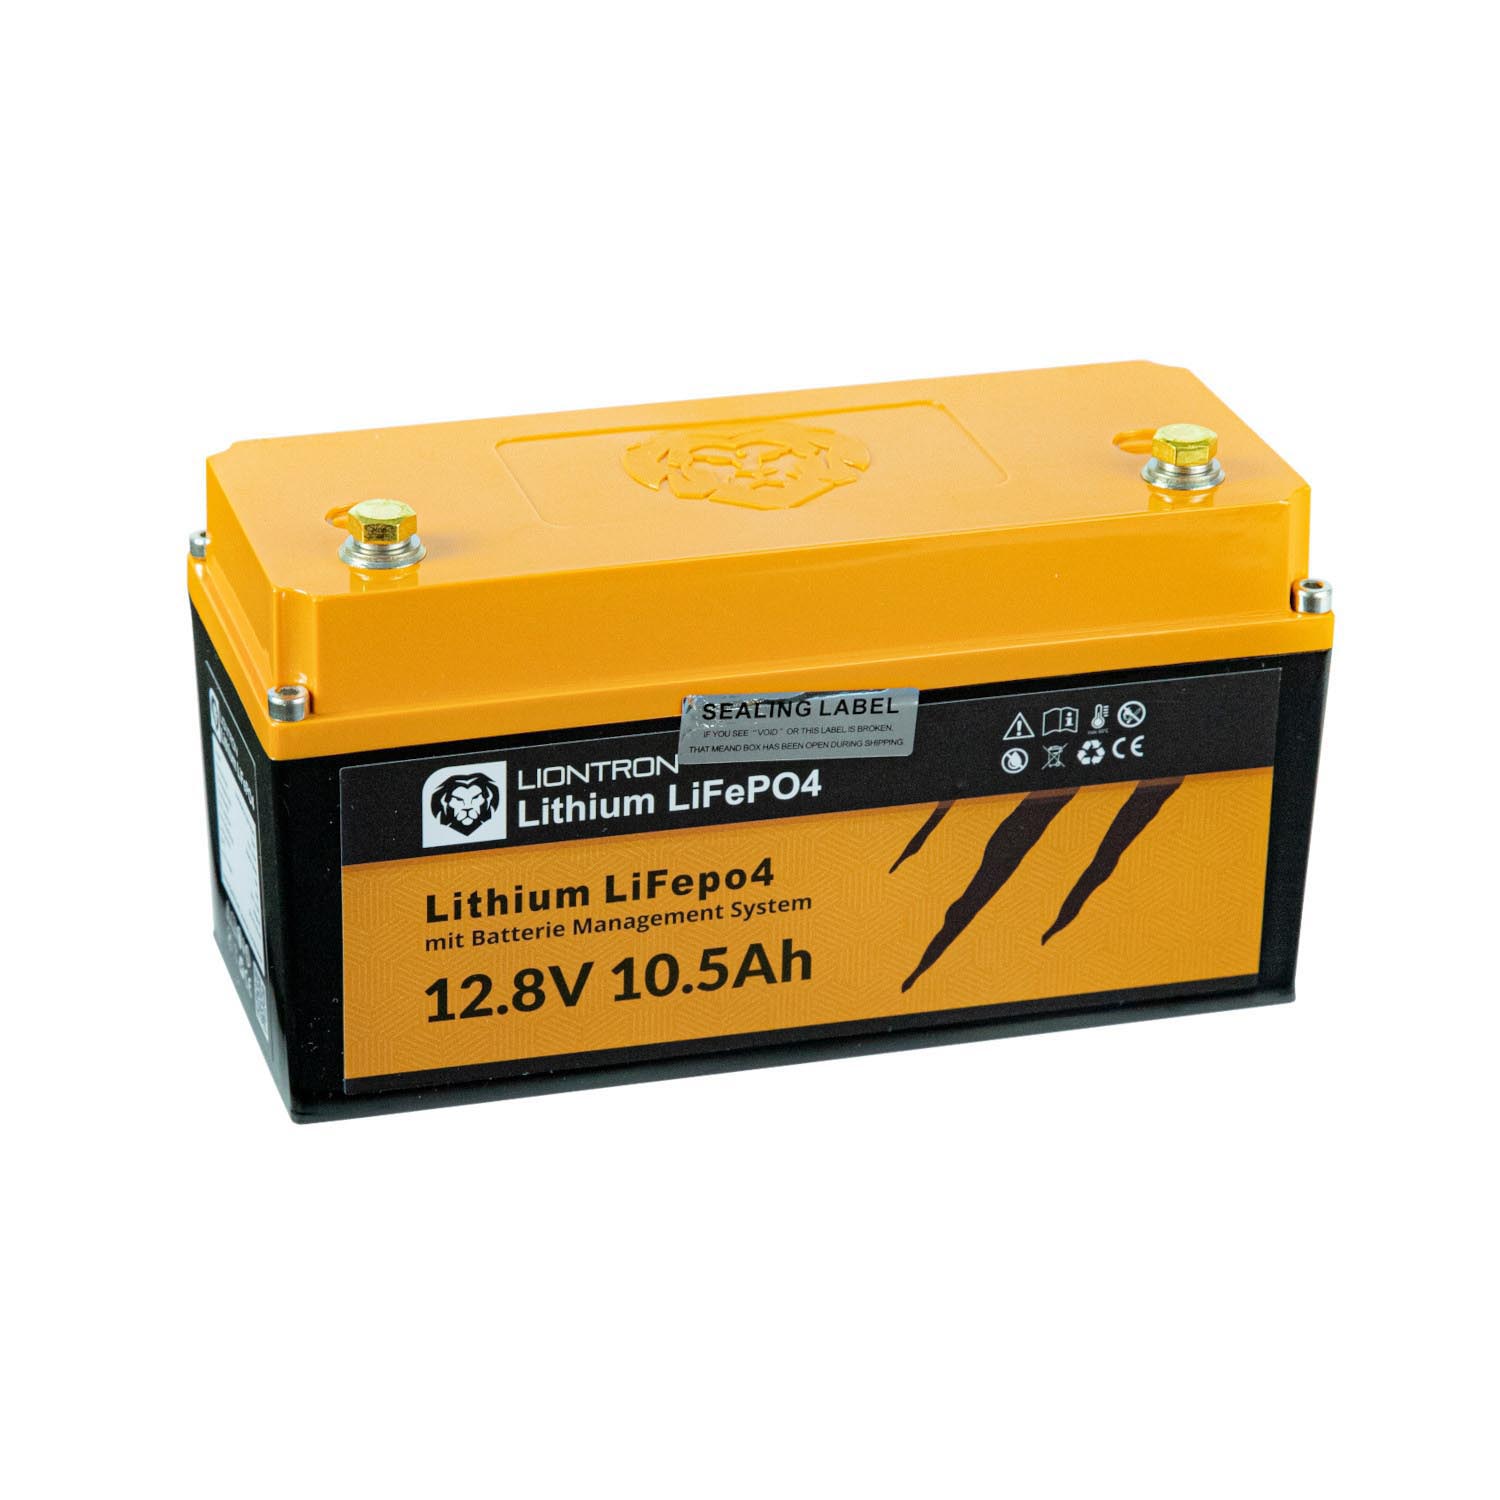 Liontron 10,5Ah 12V LiFePO4 Lithium Batterie Wohnmobil Speicherbatterie (USt-befreit nach §12 Abs.3 Nr. 1 S.1 UStG)